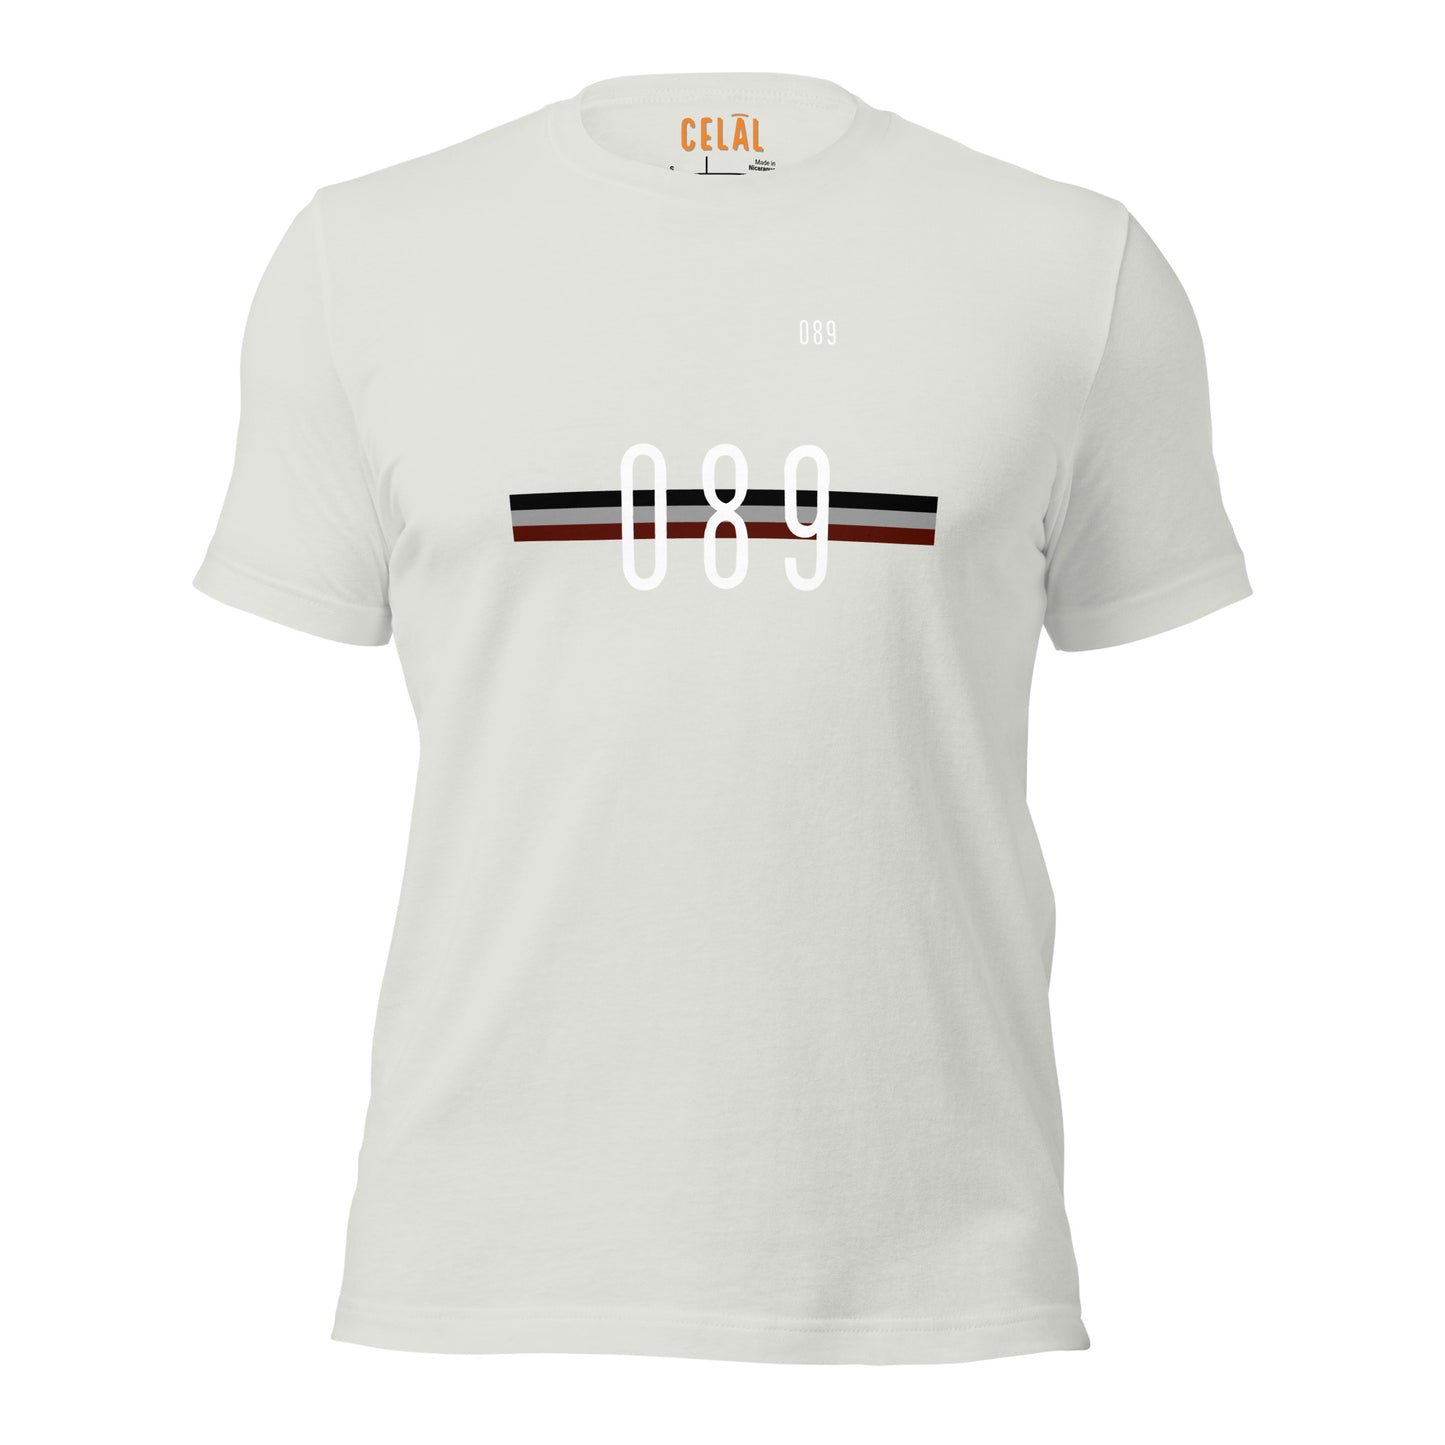 089 Unisex t-shirt